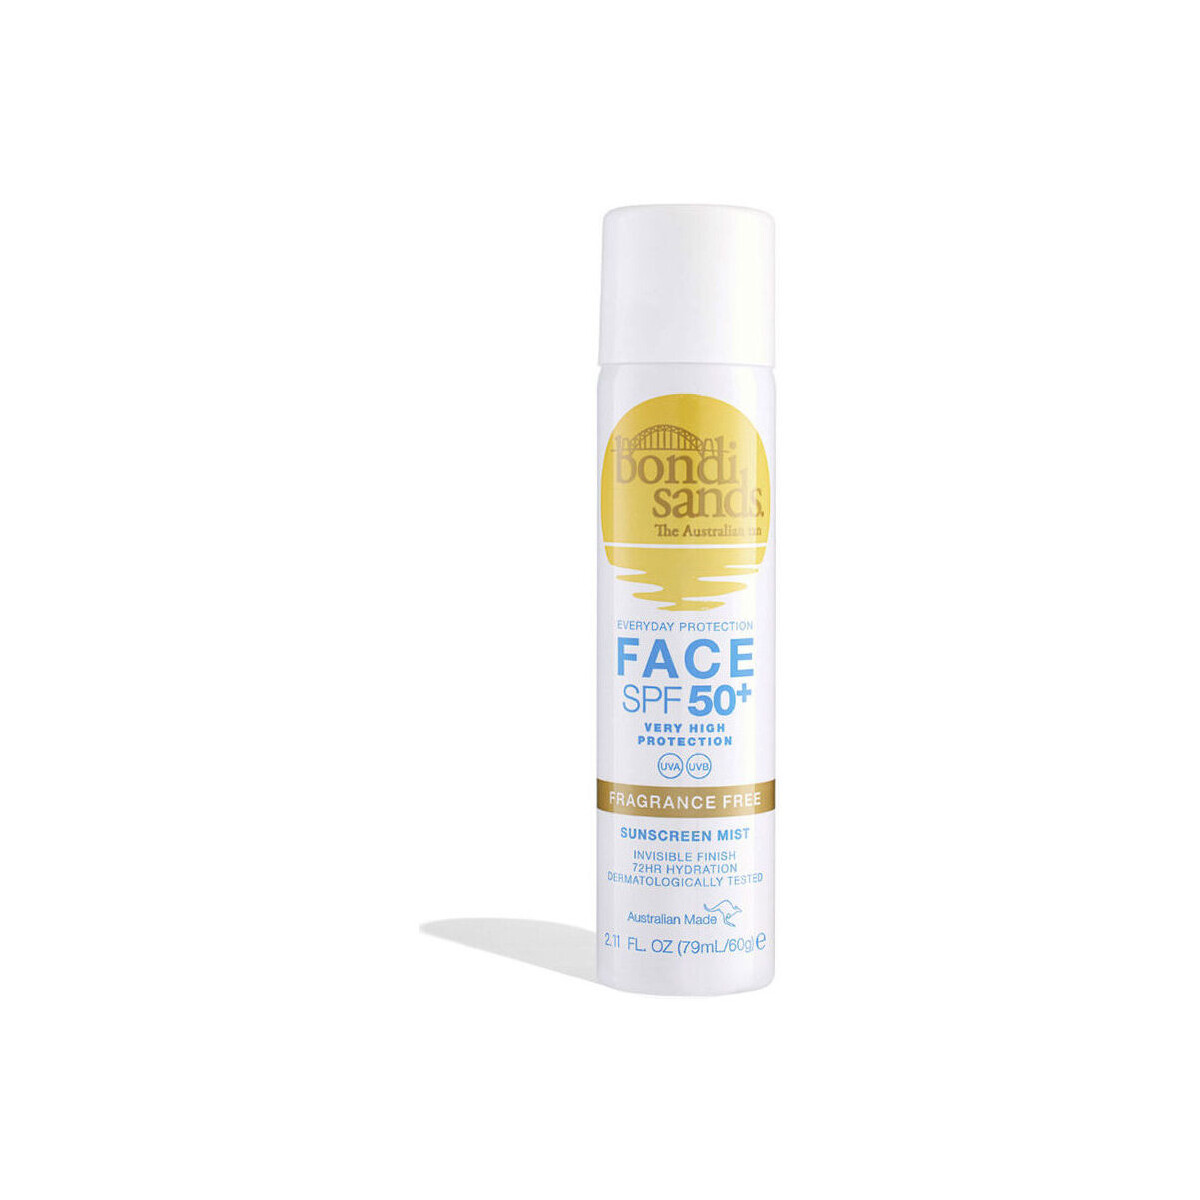 Beauty Damen Sonnenschutz & Sonnenpflege Bondi Sands Face Spf50+ Parfümfreie Gesichtslotion 